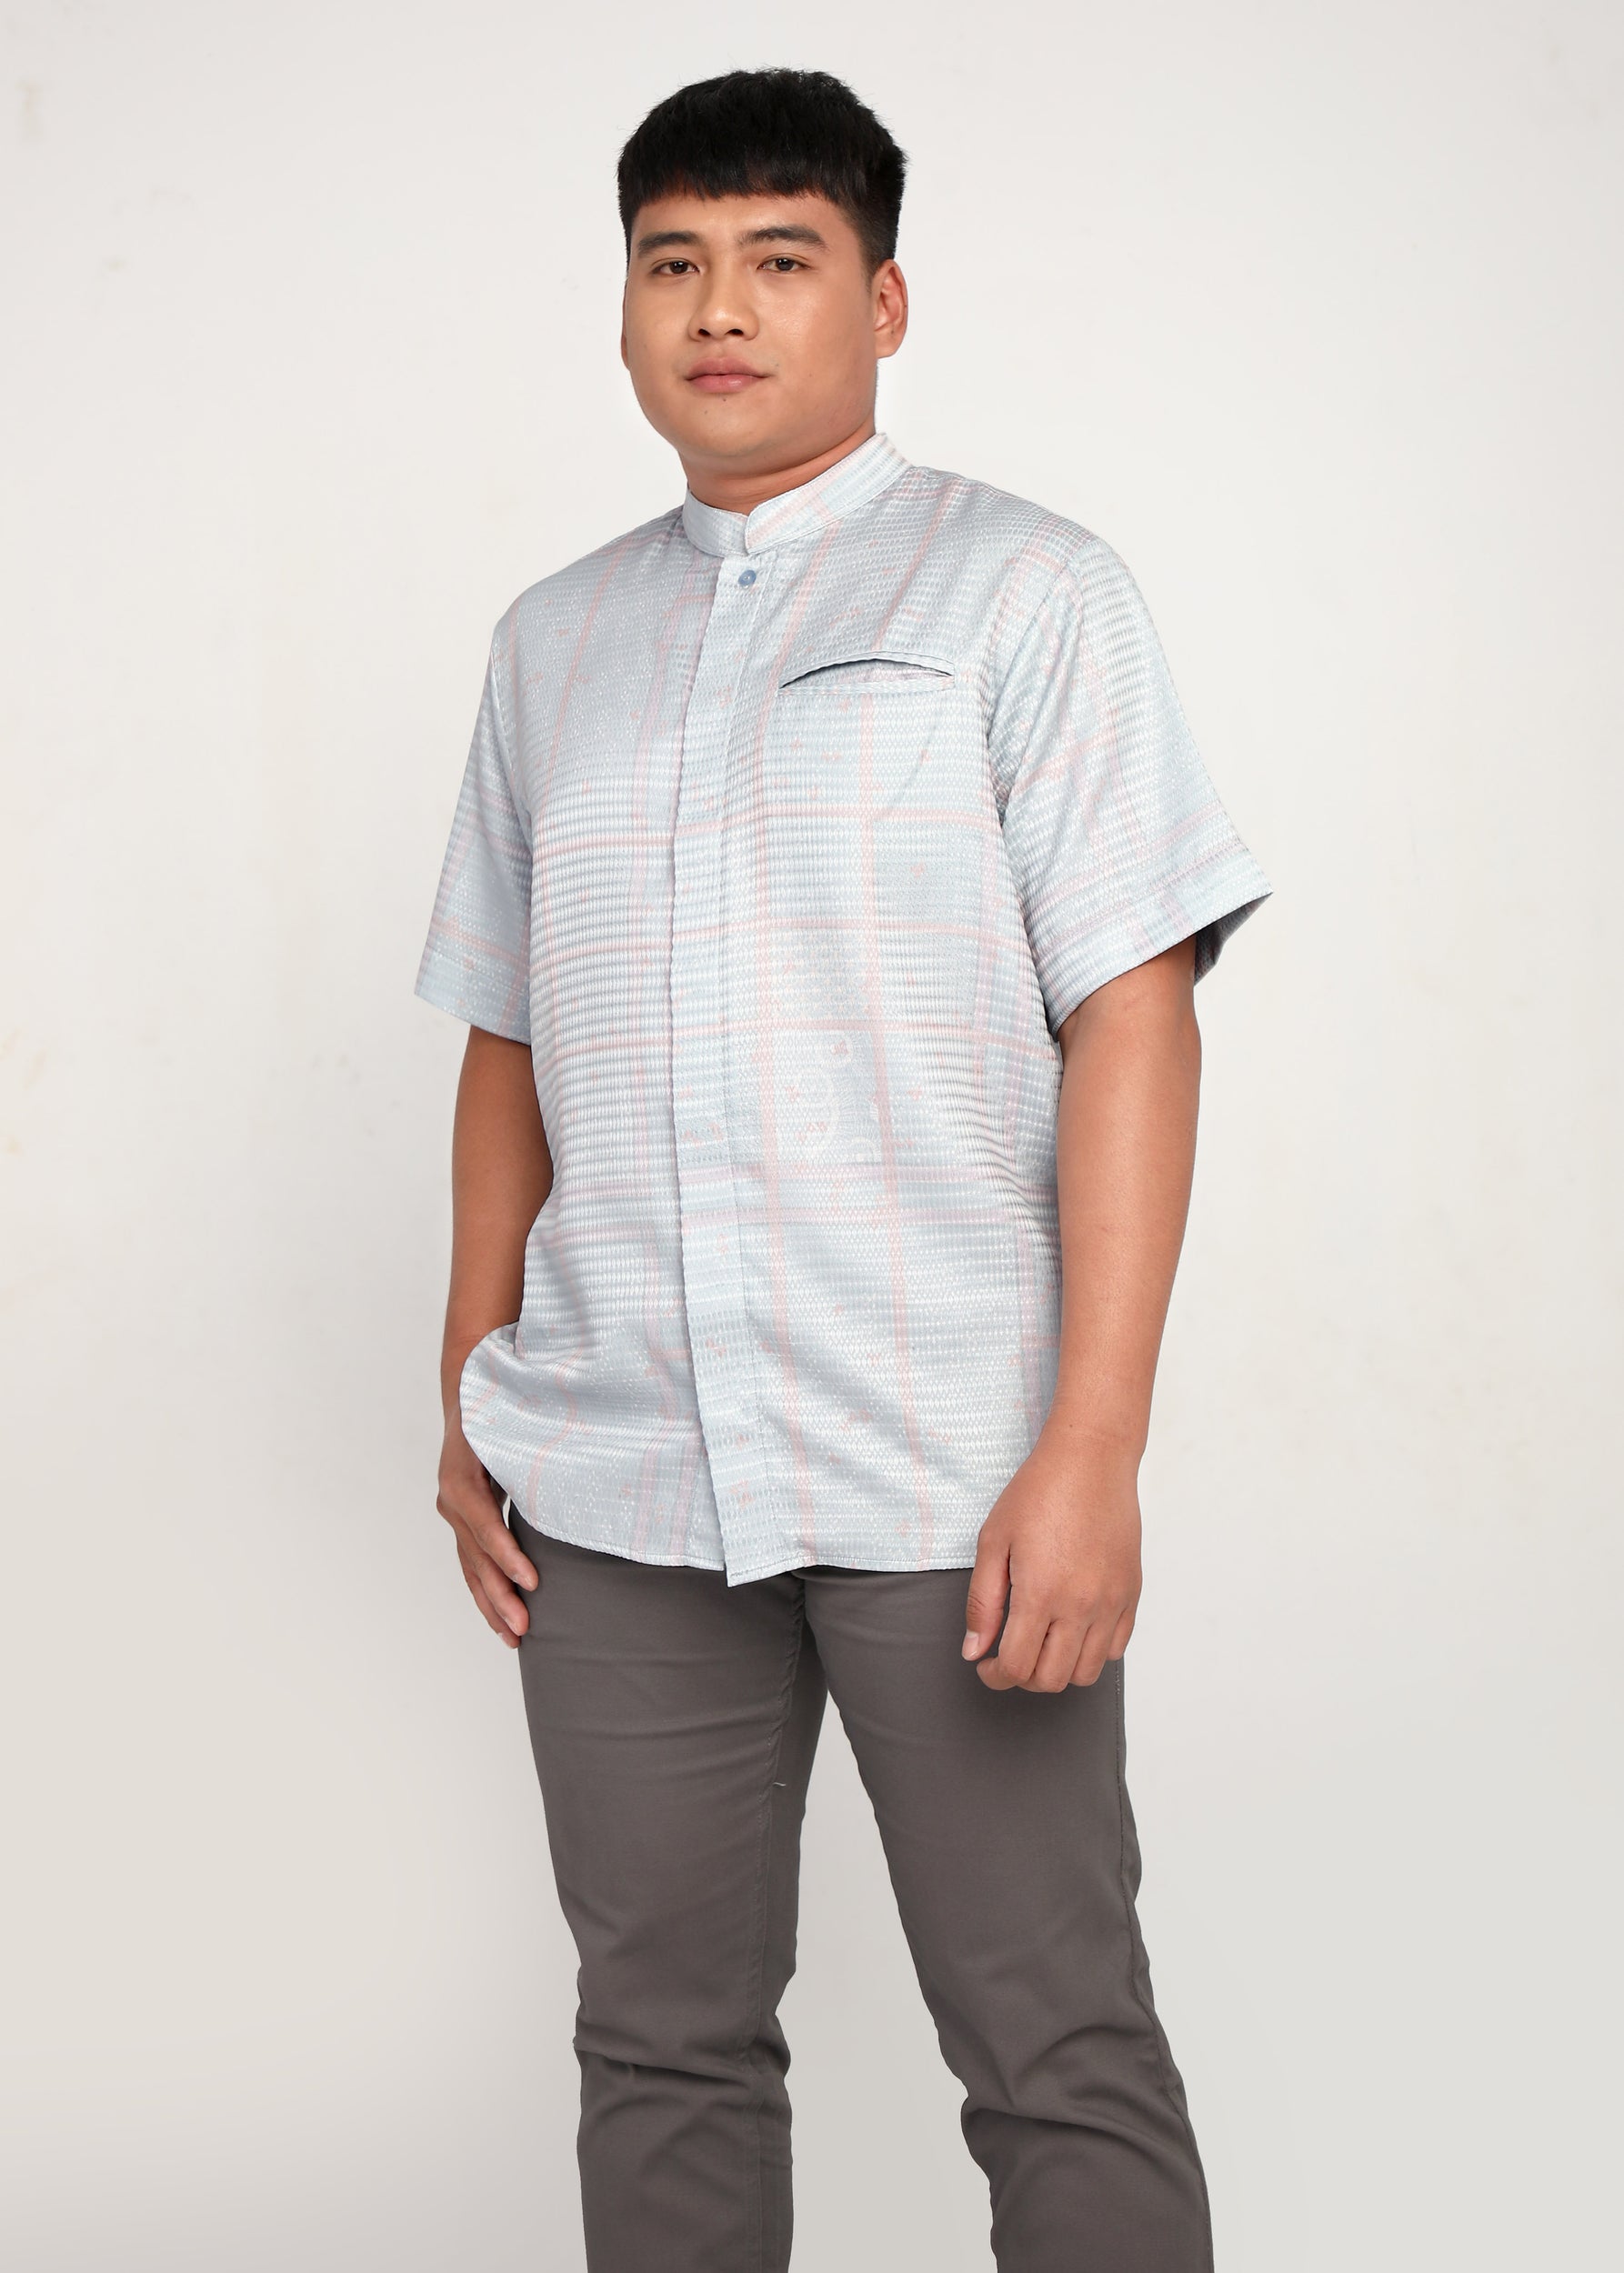 Hasu Man Shirt (L-XL)